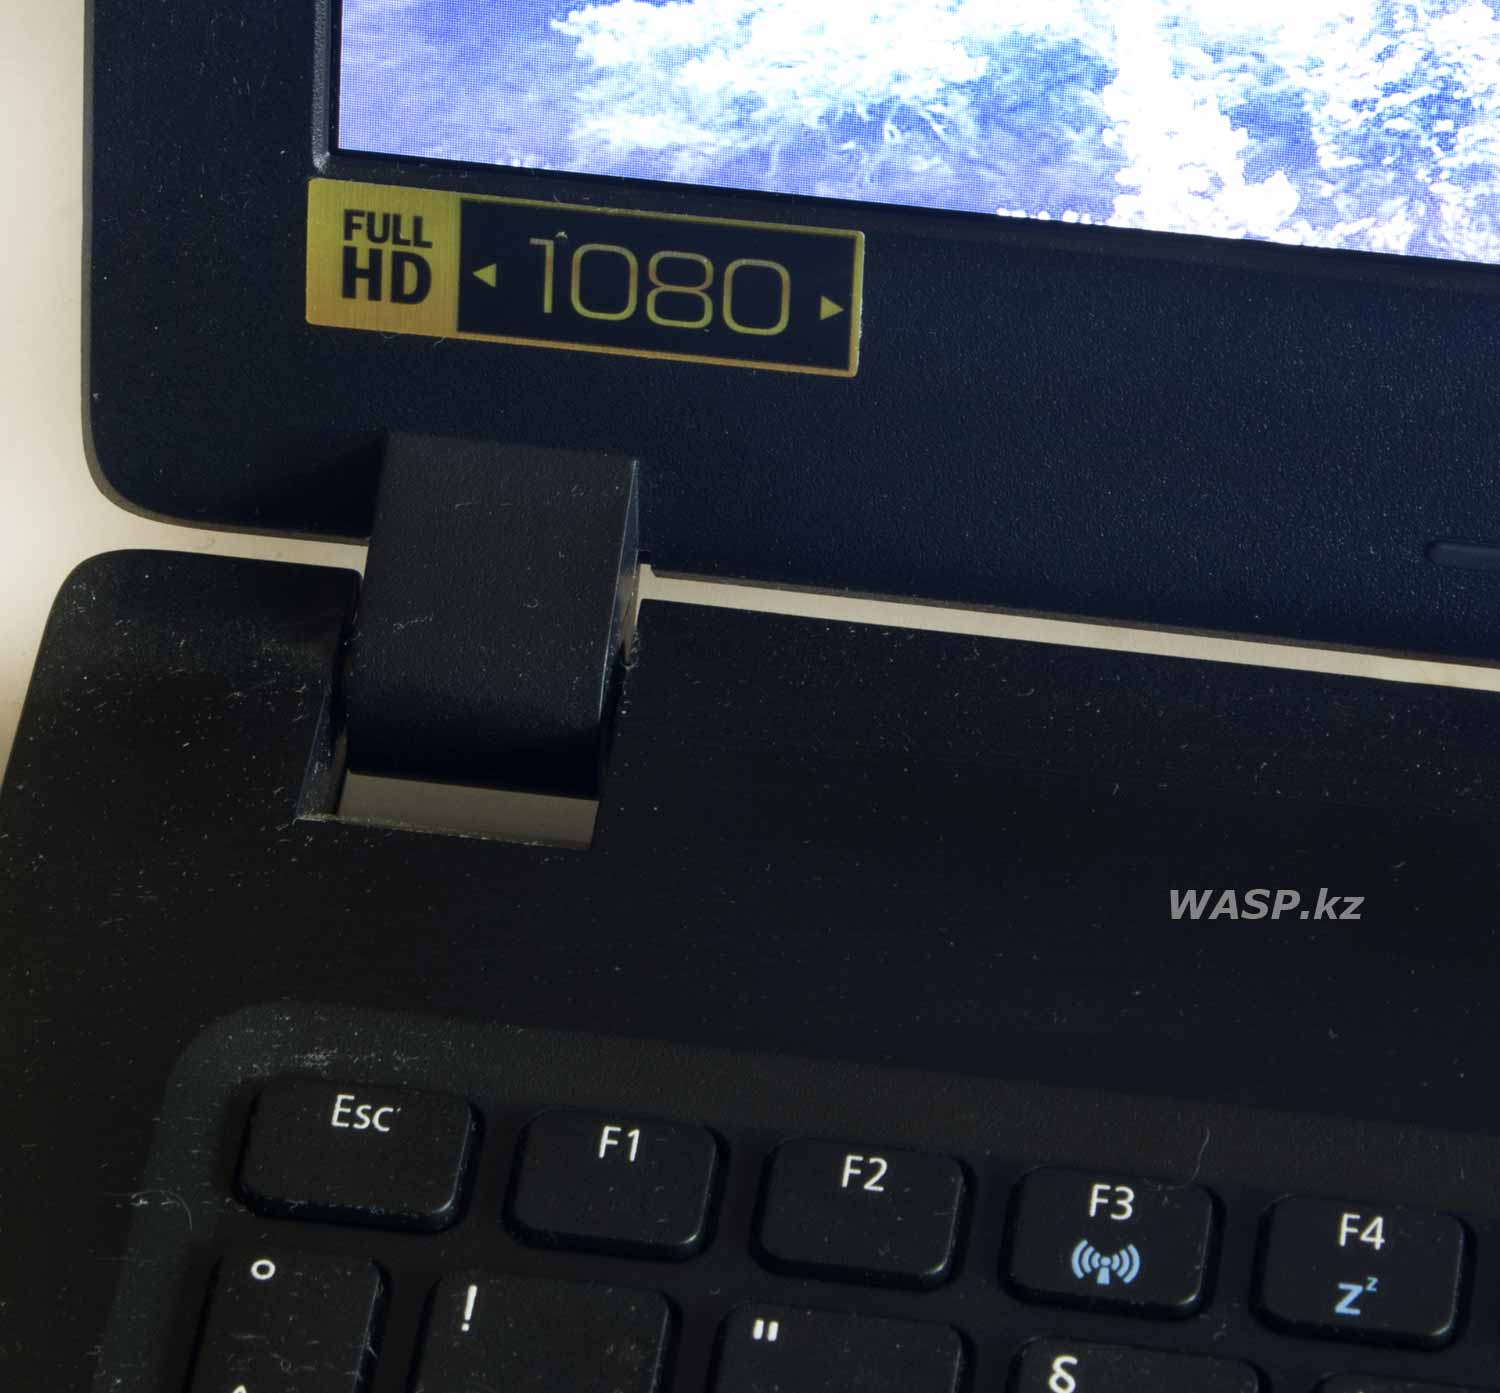 Acer Aspire 3 A315-51 обзор и описание бюджетного ноутбука N17Q1